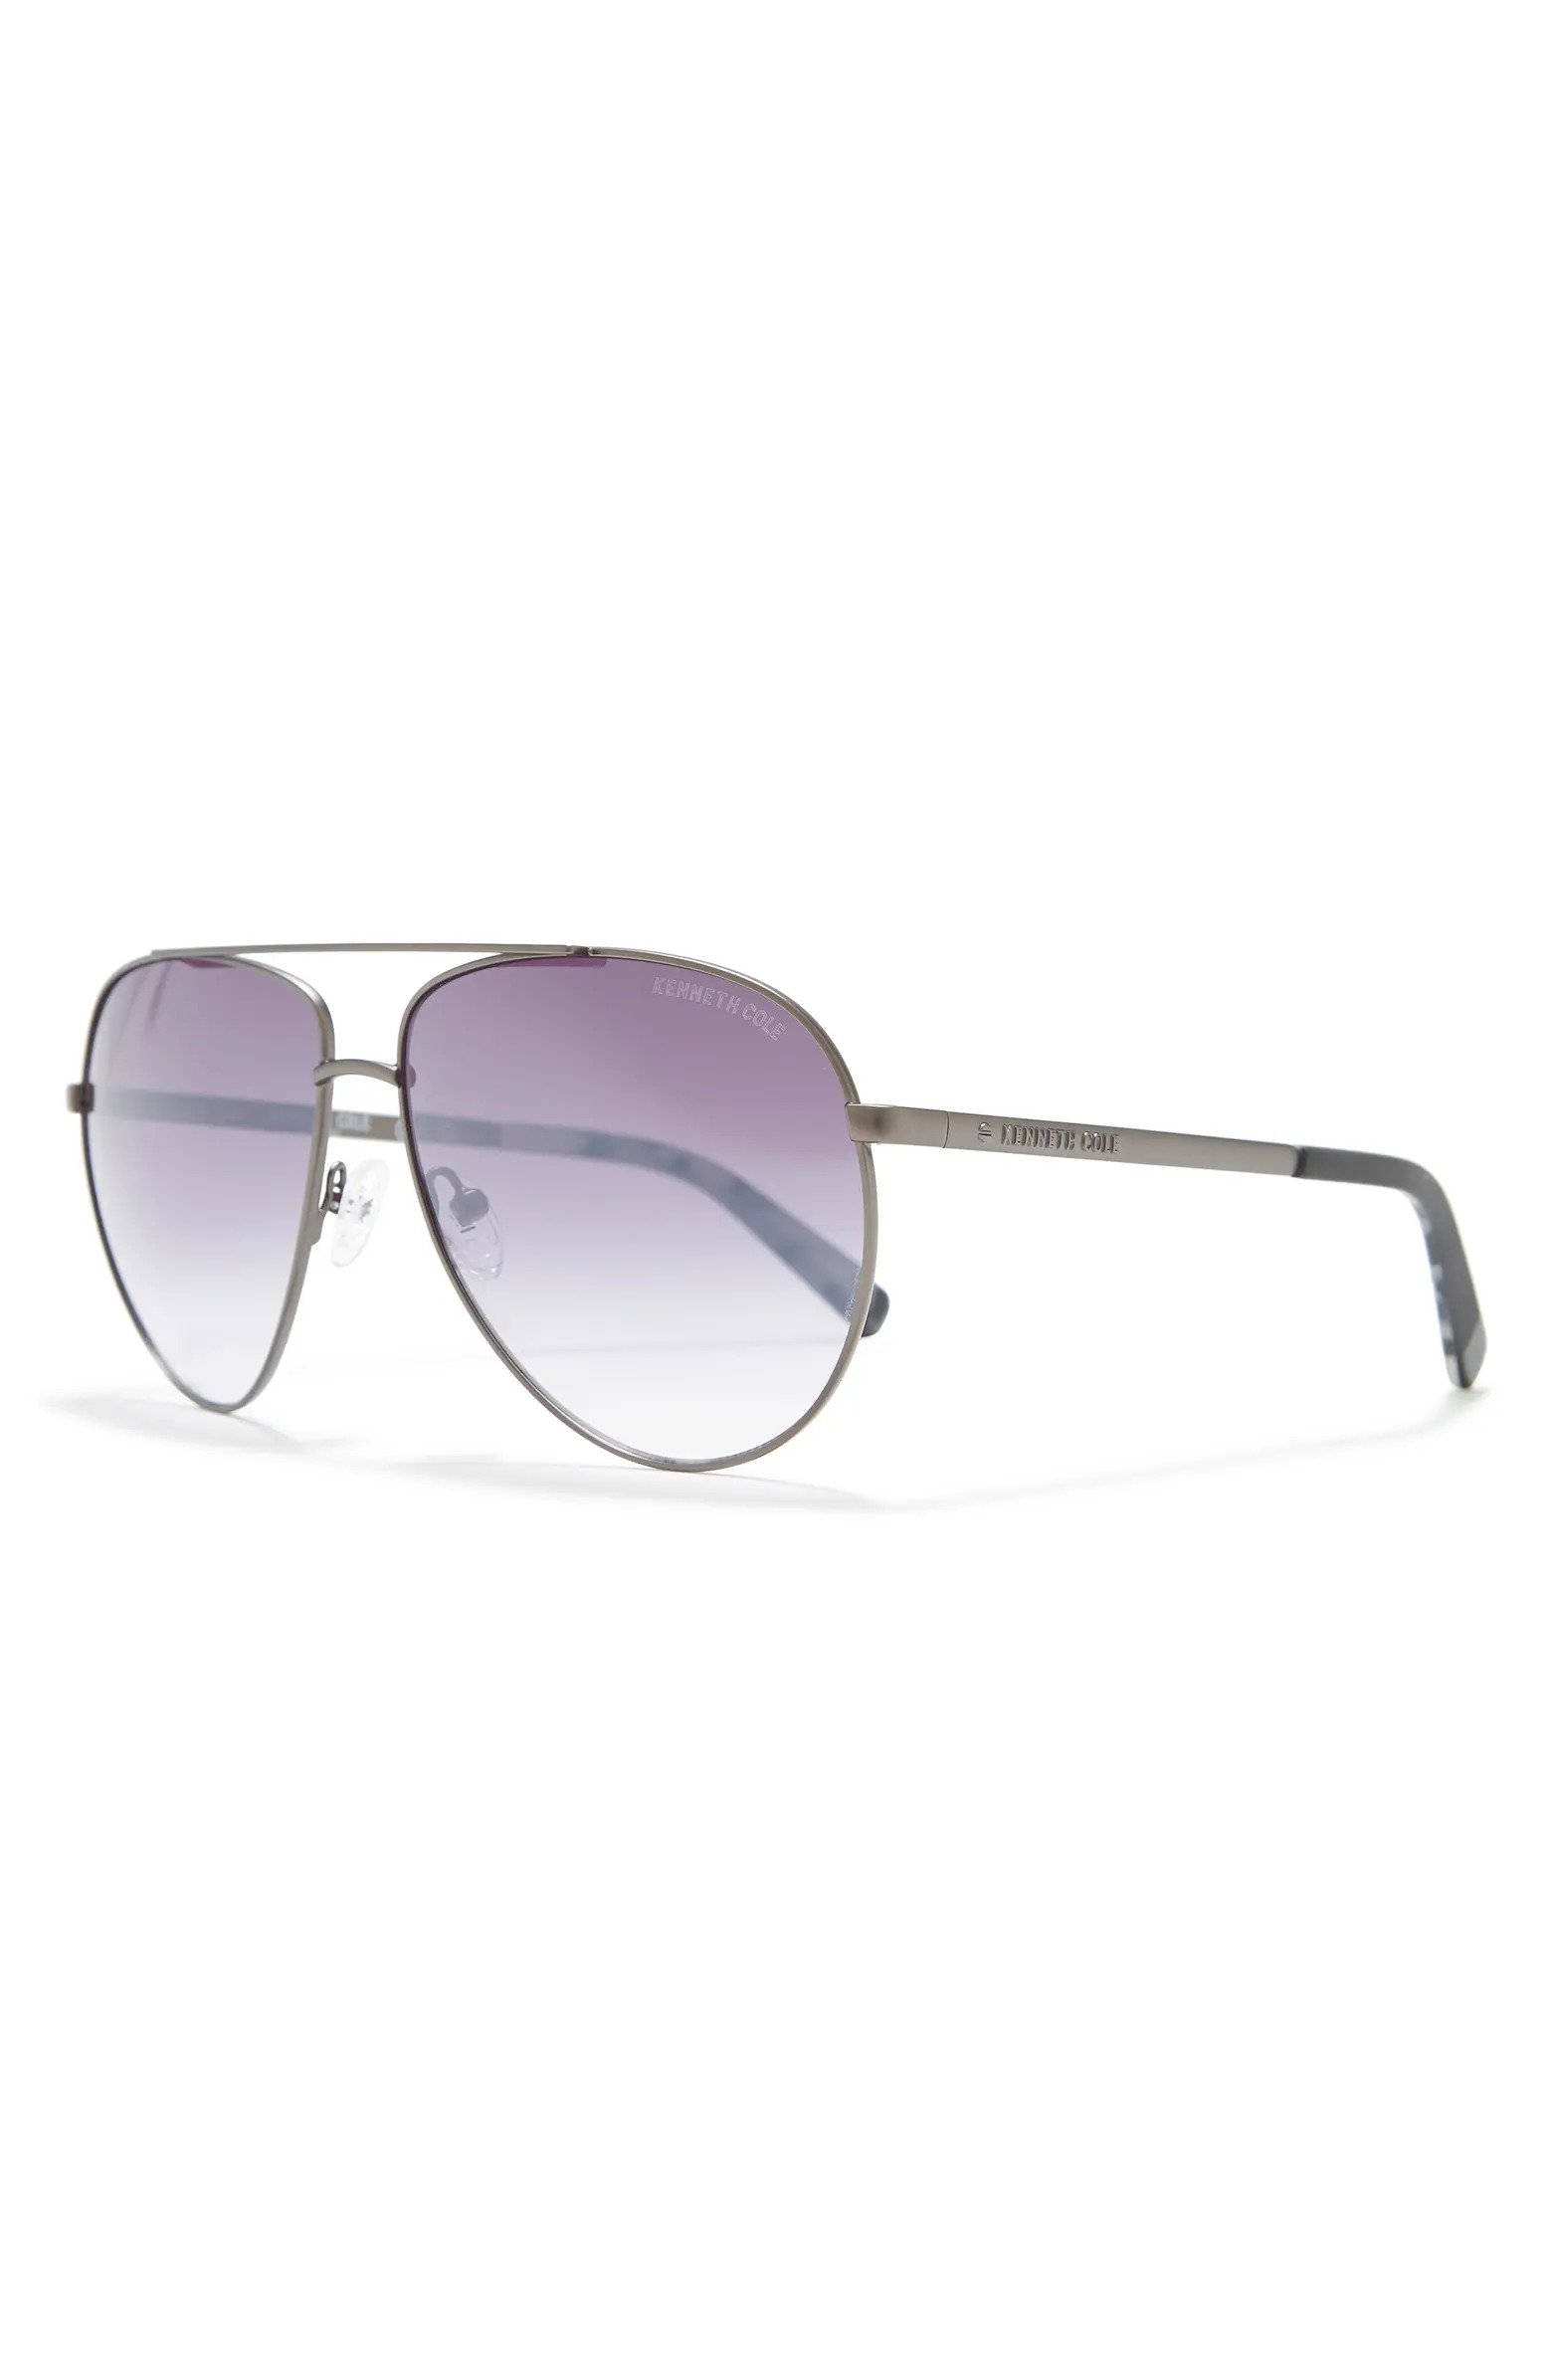 Kenneth Cole 61mm Aviator Sunglasses